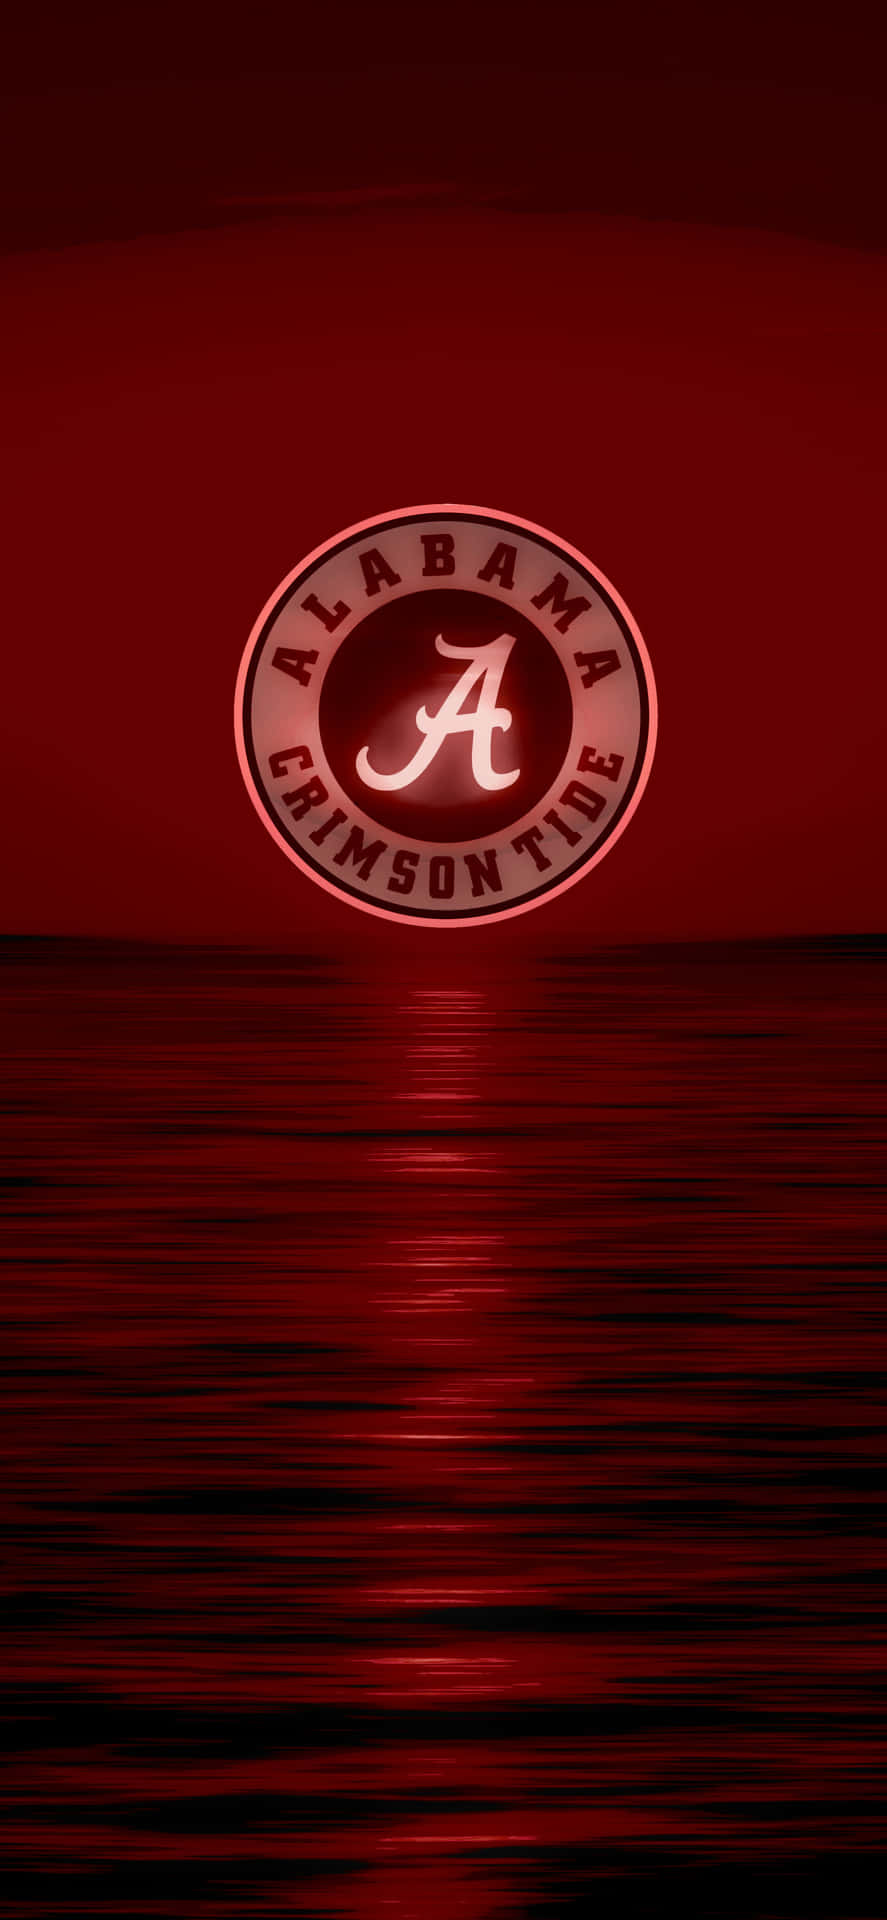 Red Sunset Alabama Football Logo Wallpaper